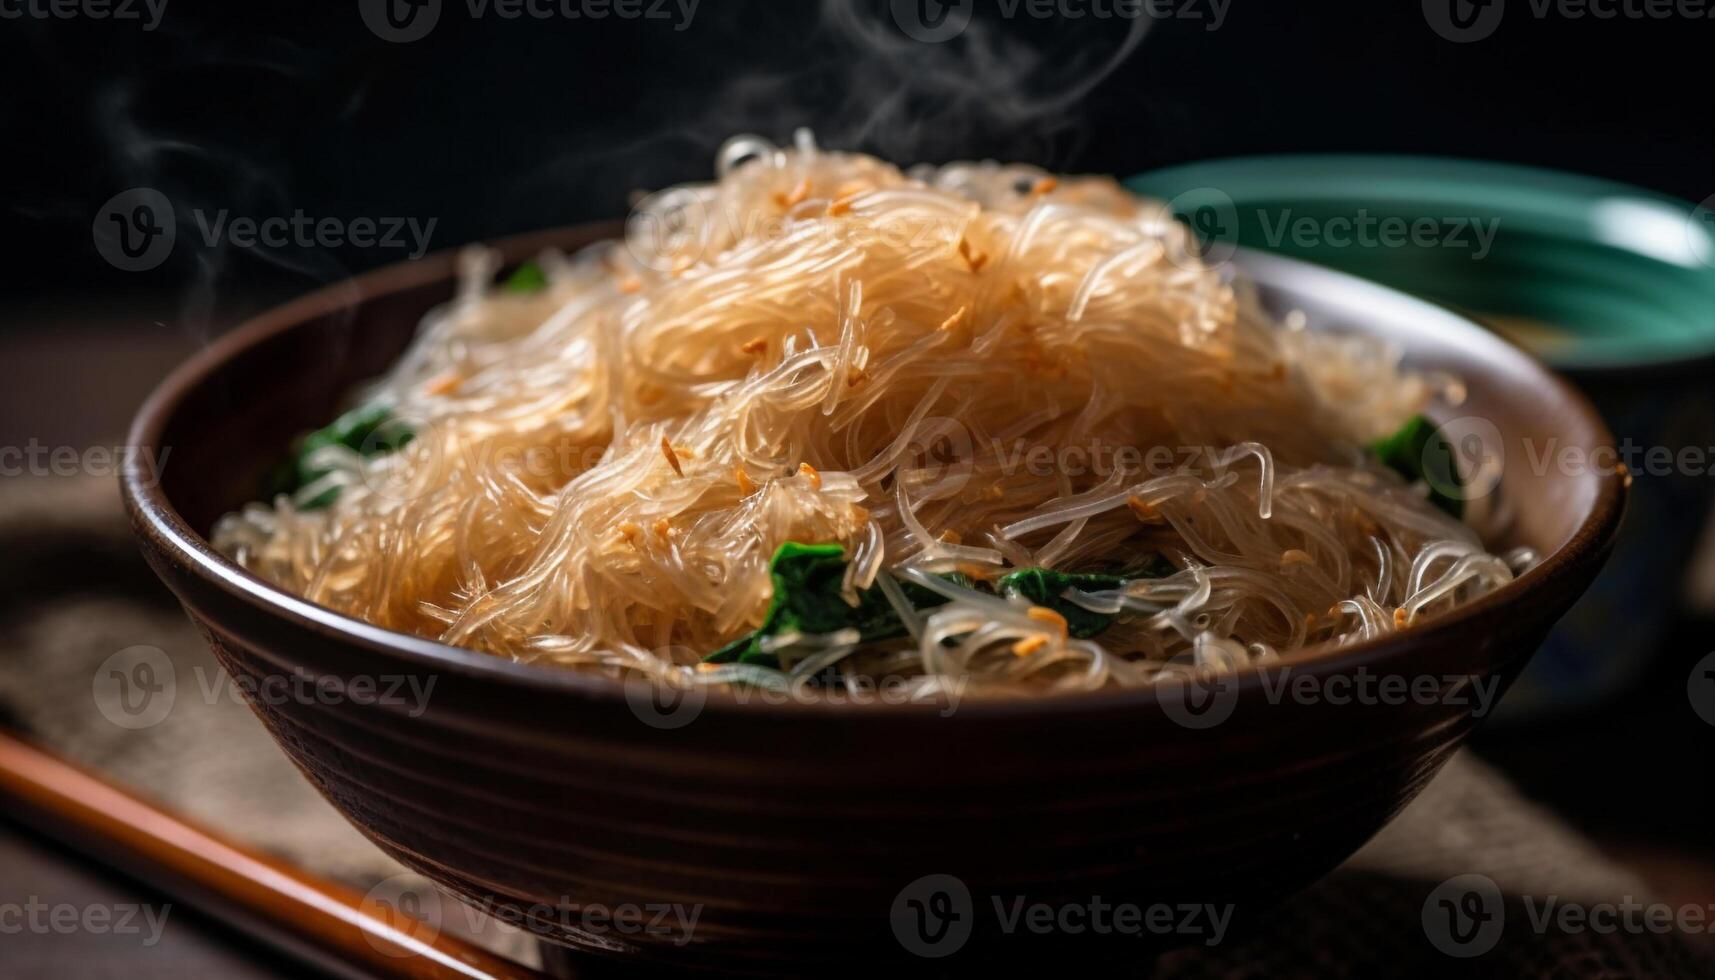 gezond groente soep met varkensvlees en vermicelli in Chinese cultuur gegenereerd door ai foto